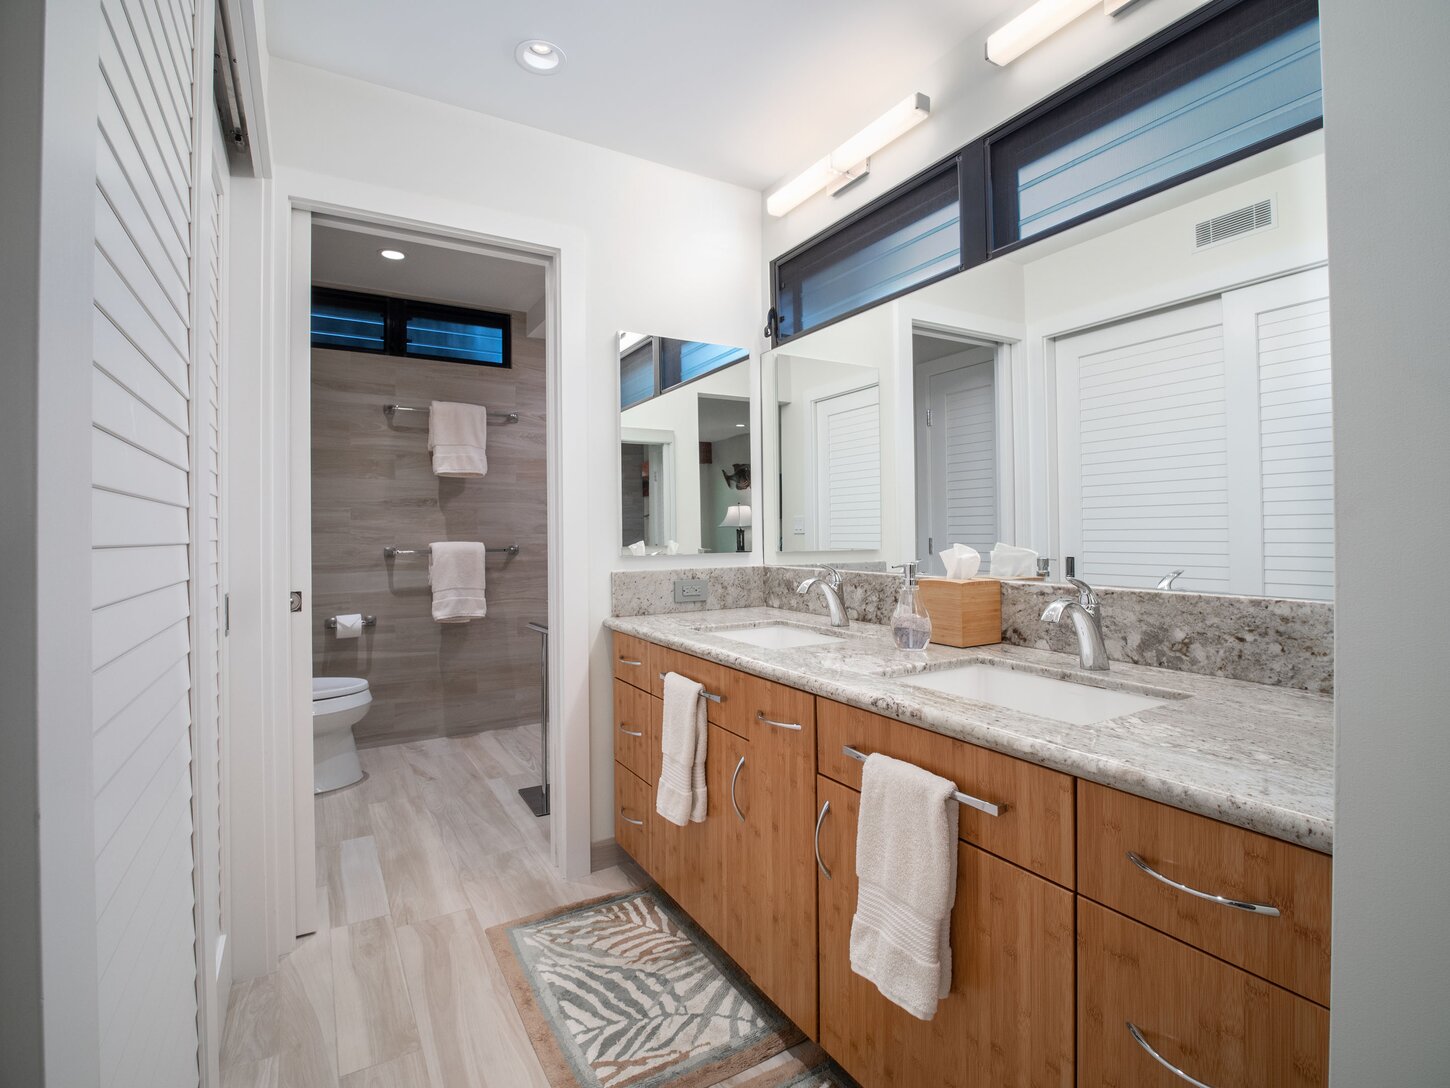 Master bedroom features en-suite bathroom vanity and shower spaces